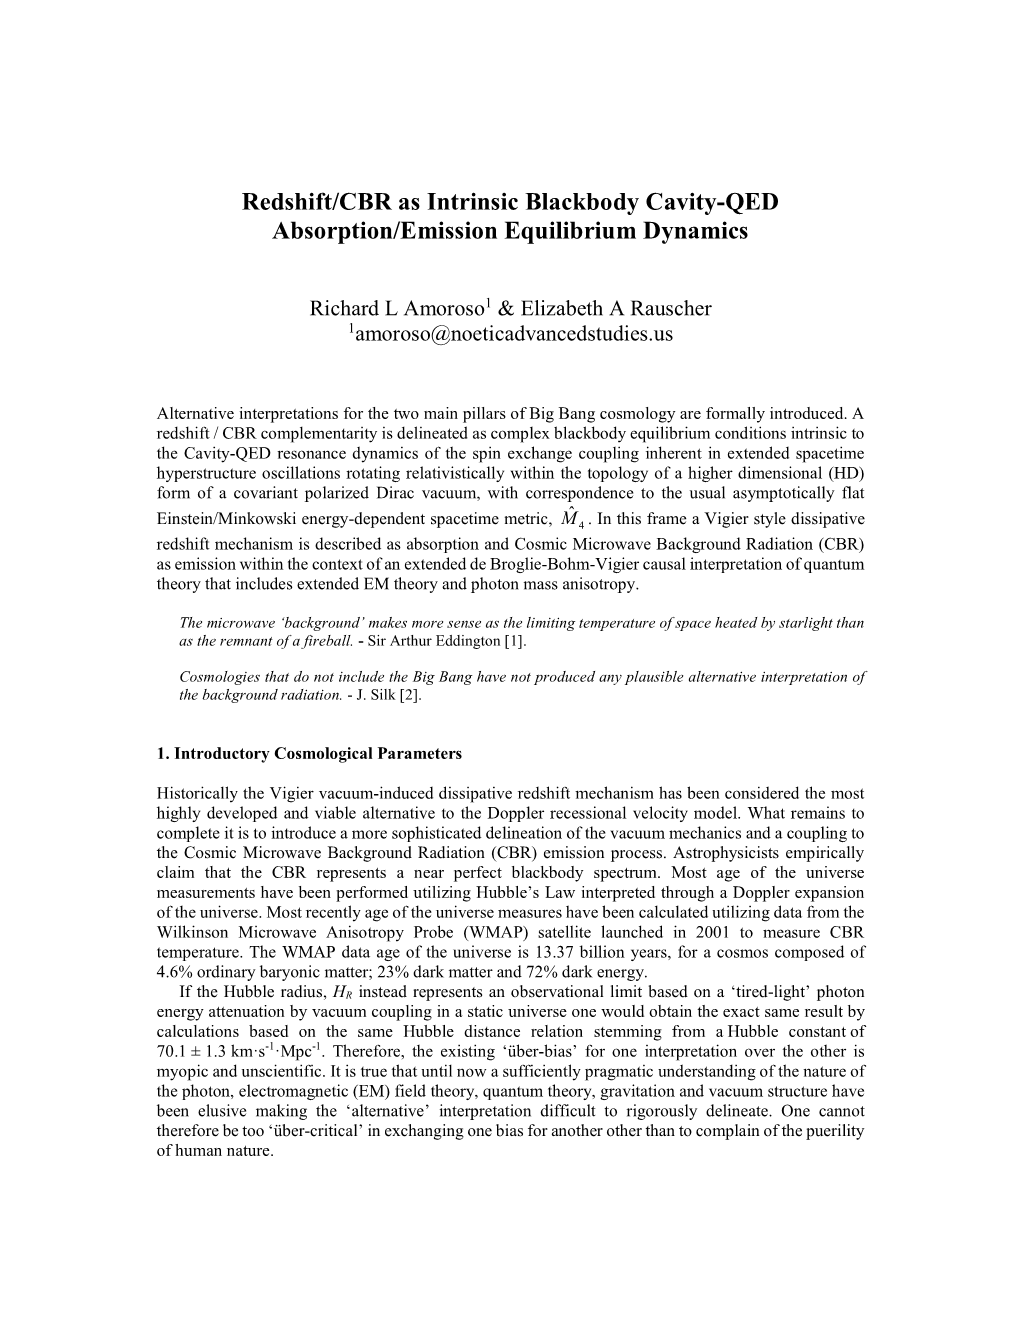 Redshift/CBR As Intrinsic Blackbody Cavity-QED Absorption/Emission Equilibrium Dynamics